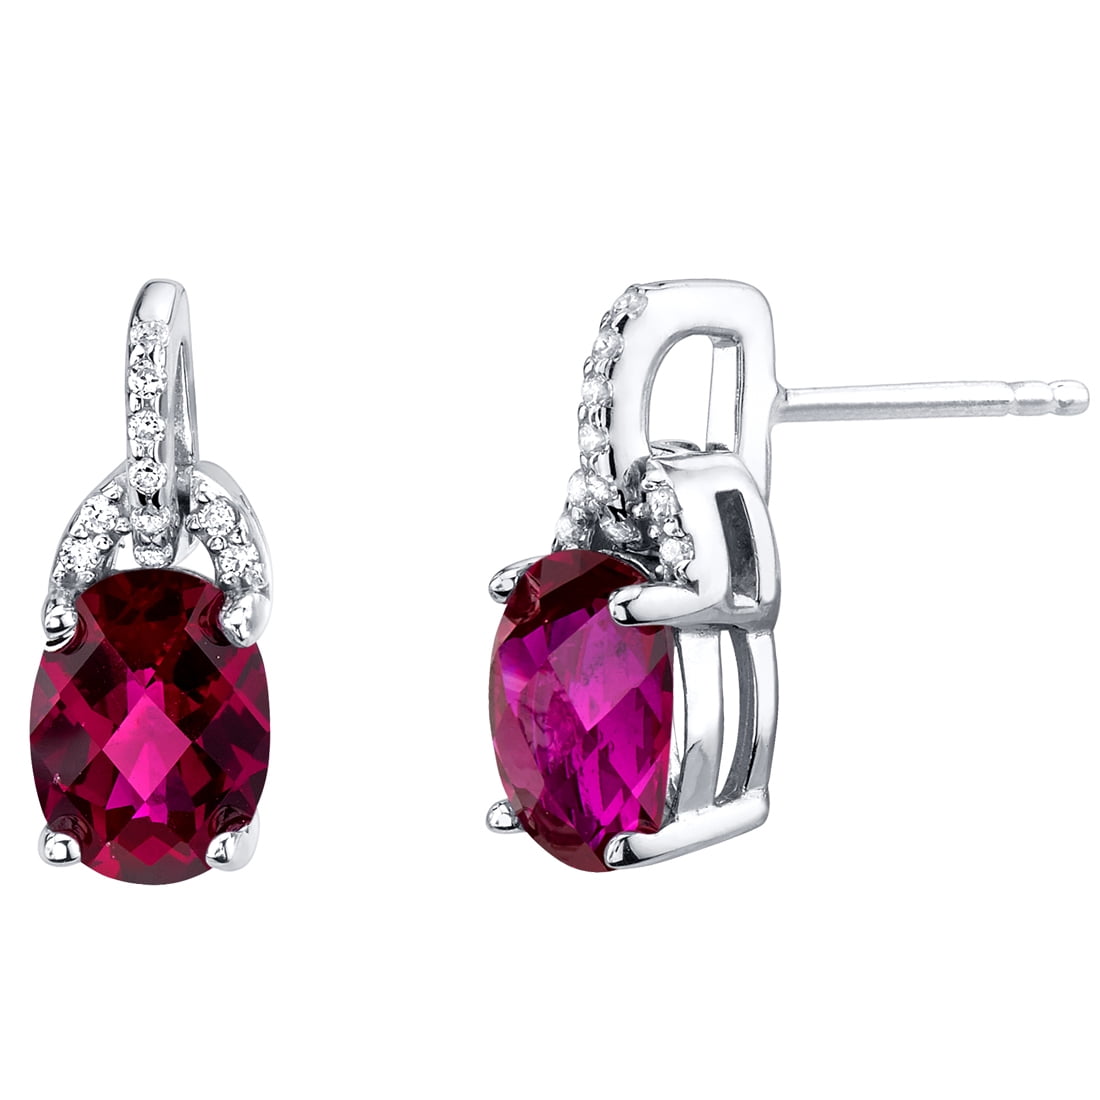 3 carat total Created Ruby stud earrings in Sterling Silver